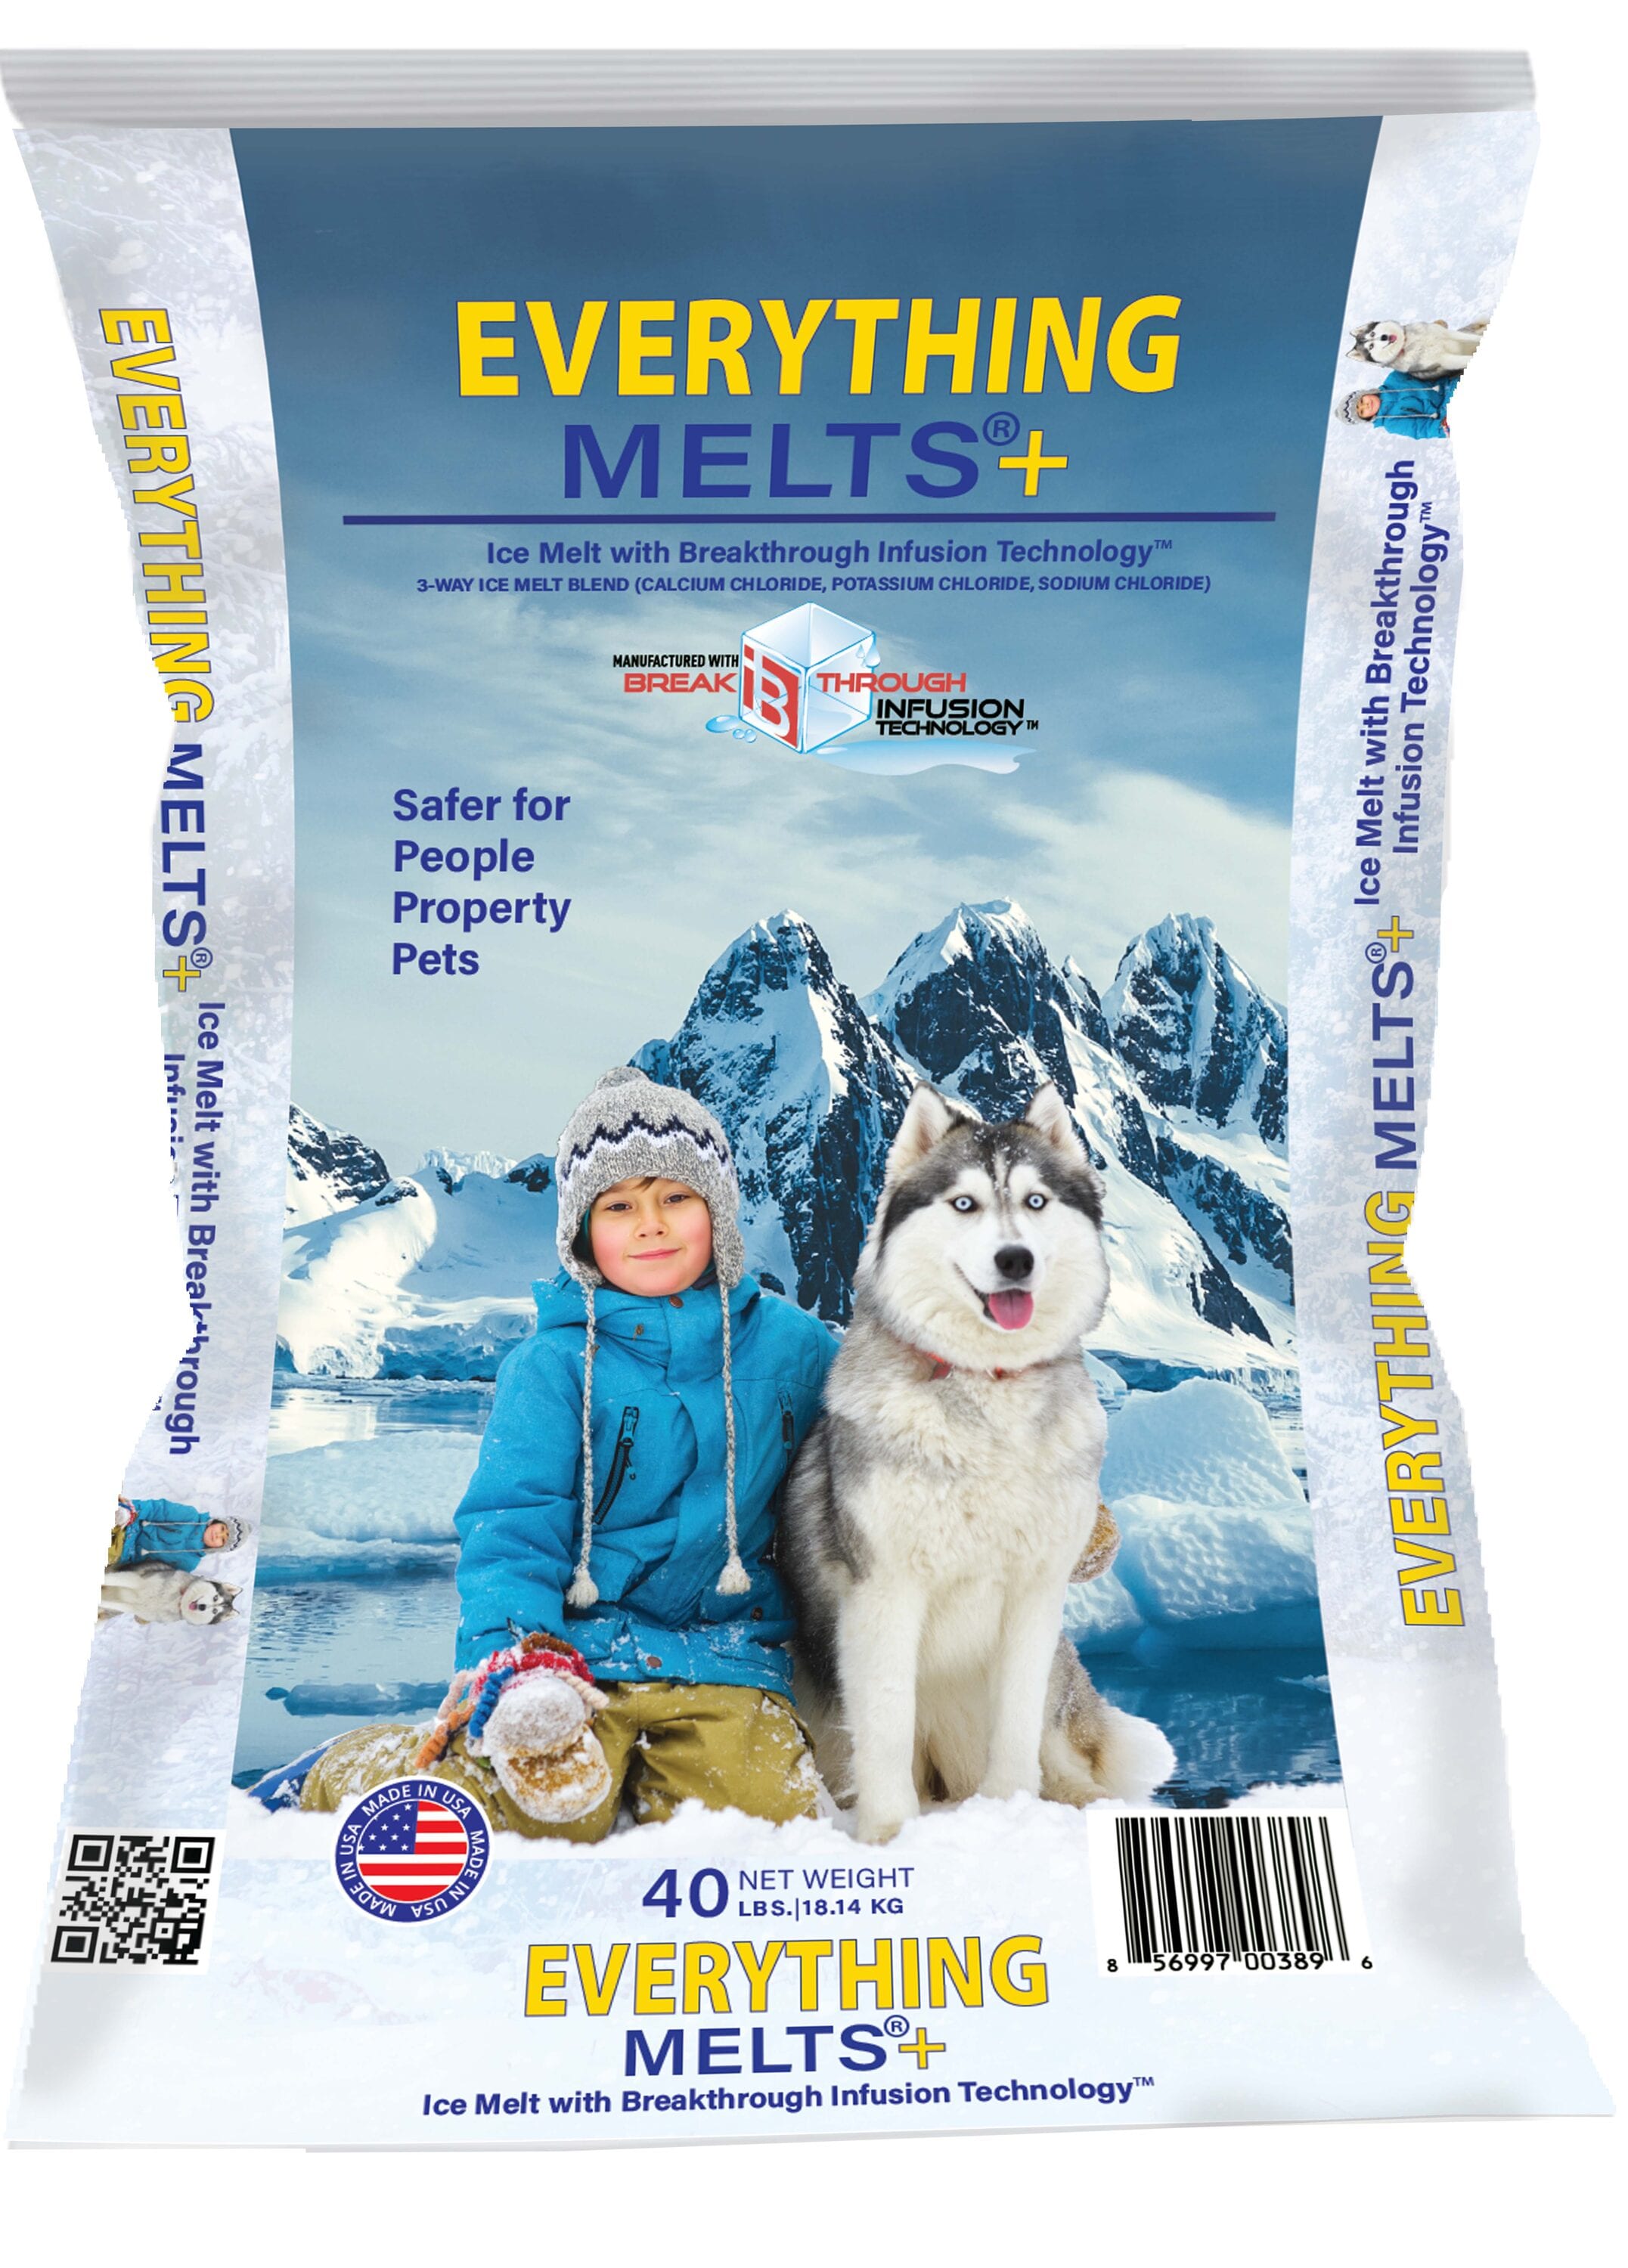 Northern Salt NS NP Paw 25 lb Bag North Pro Paw Ice Melt Salt Pet Kid